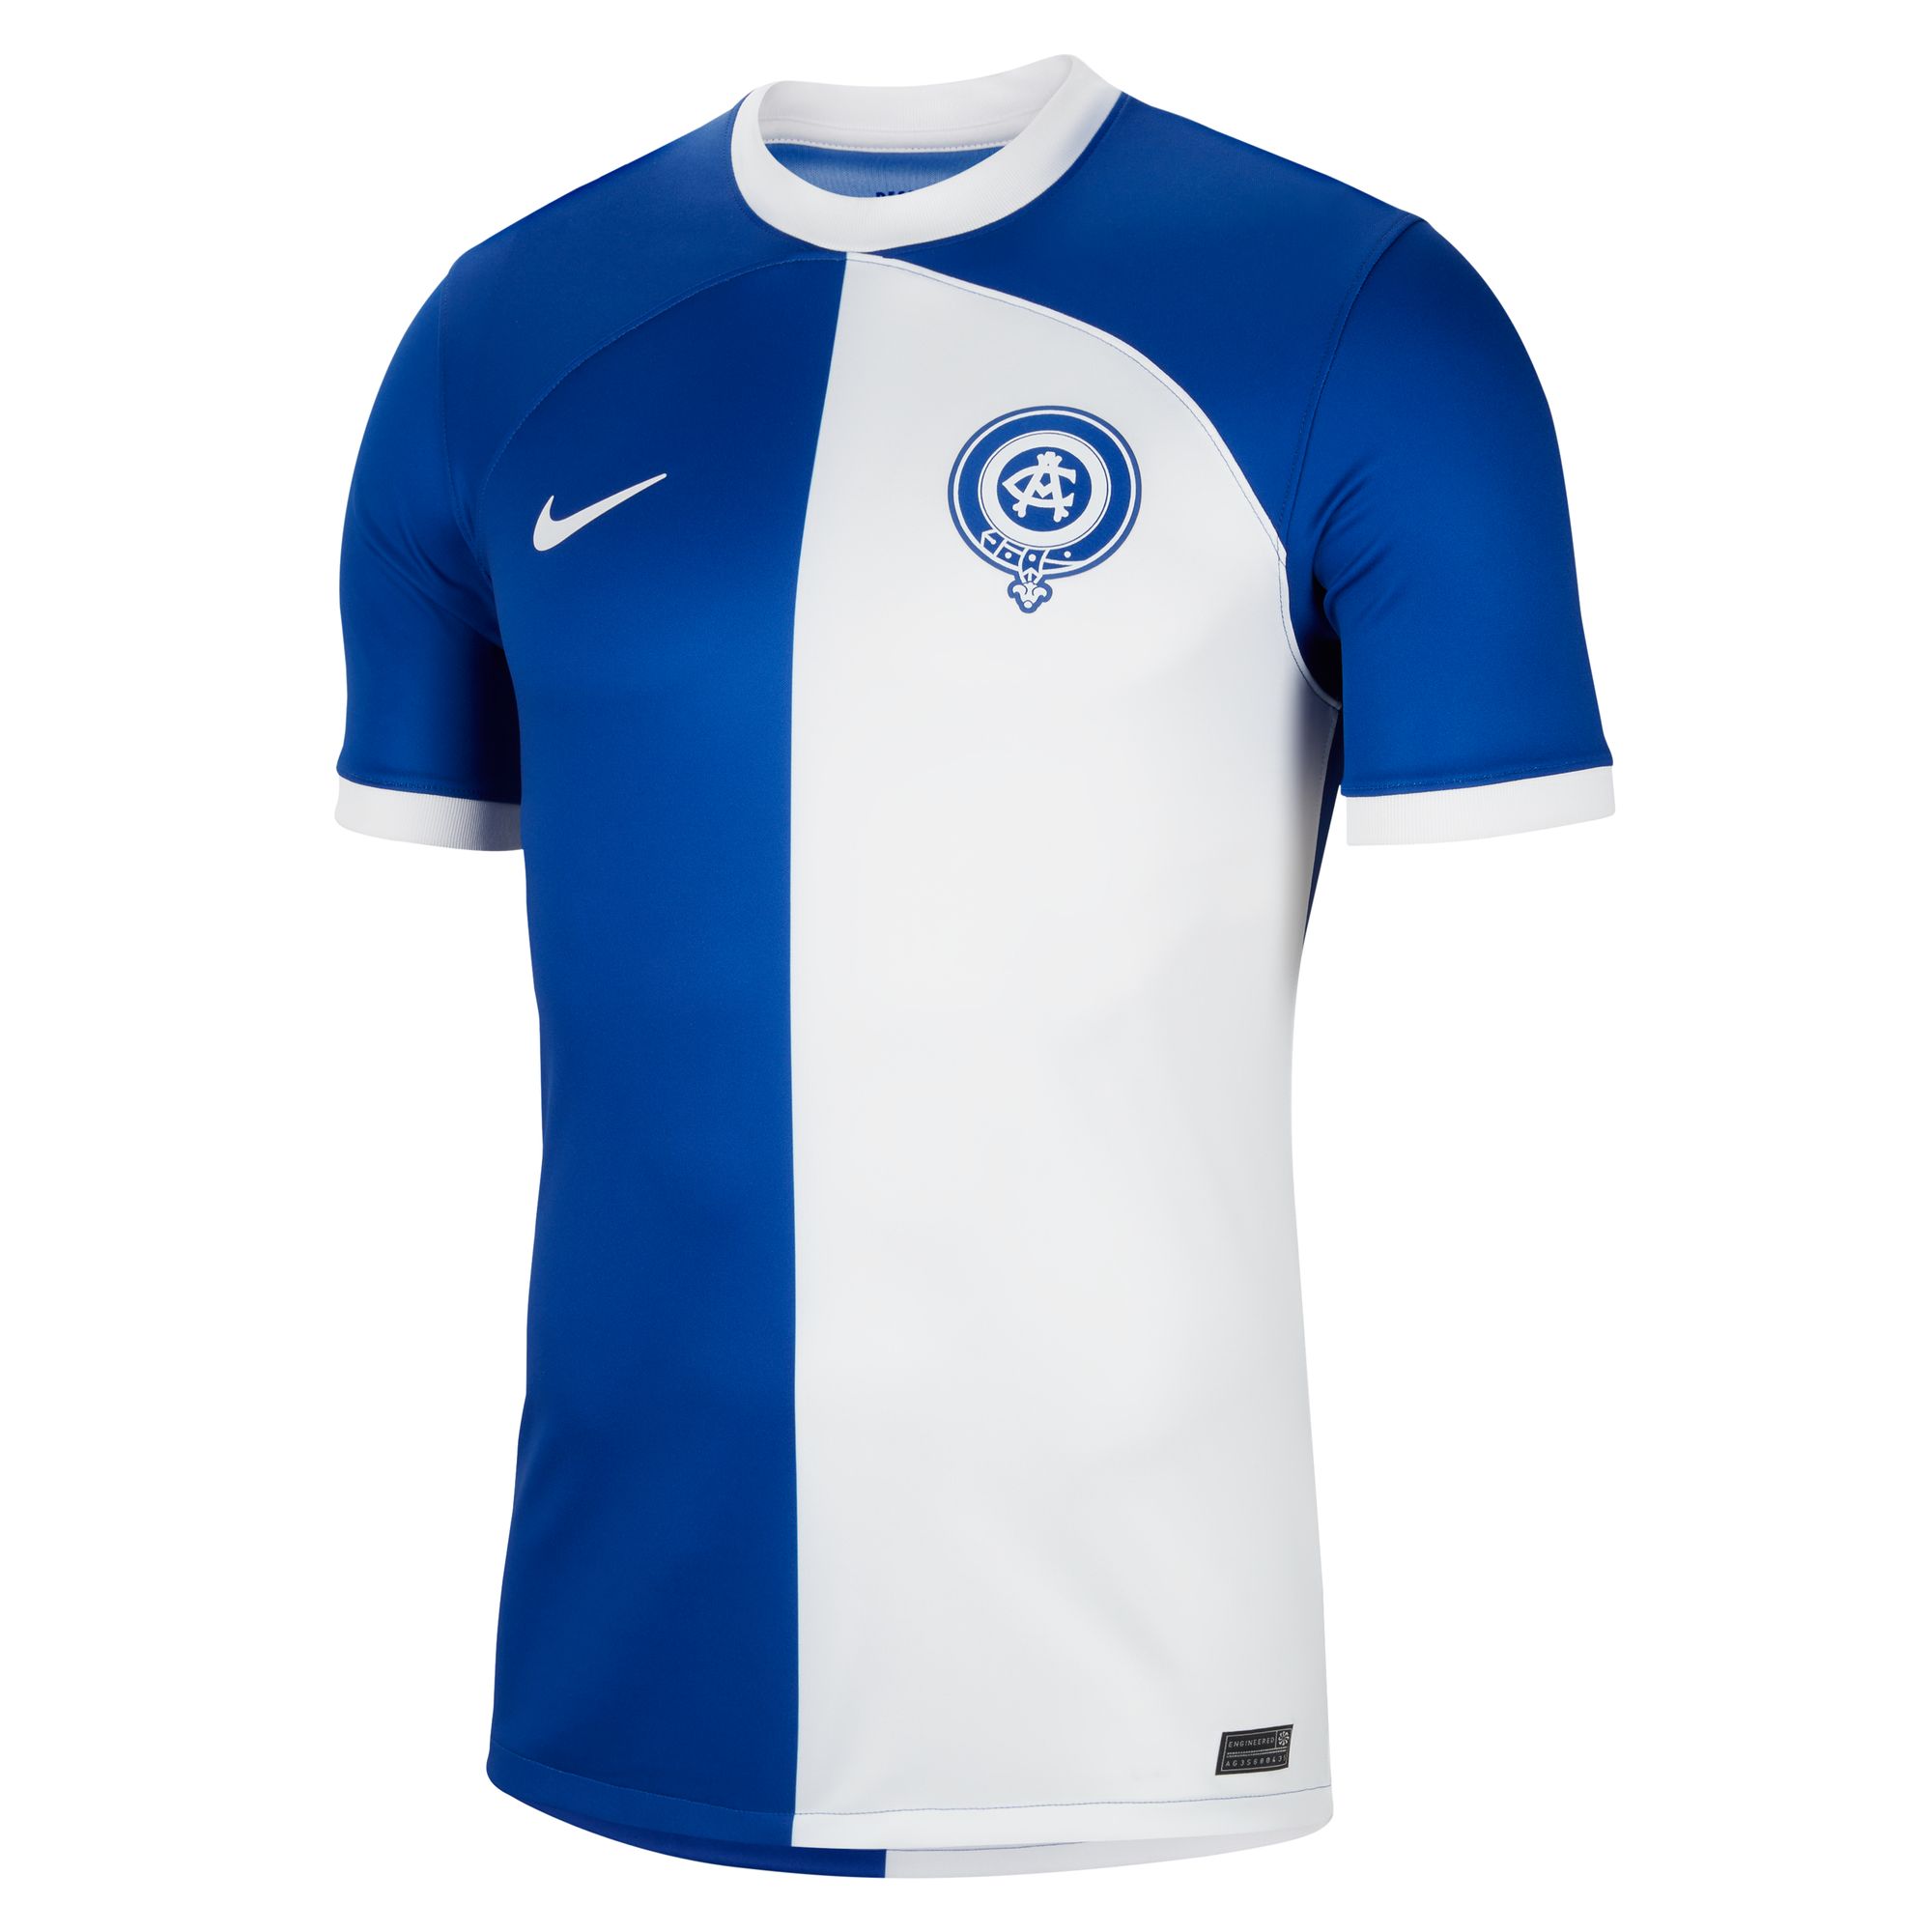 Nike Squad Leg Sleeve - Royal Blue/White - Mens Soccer Teamwear